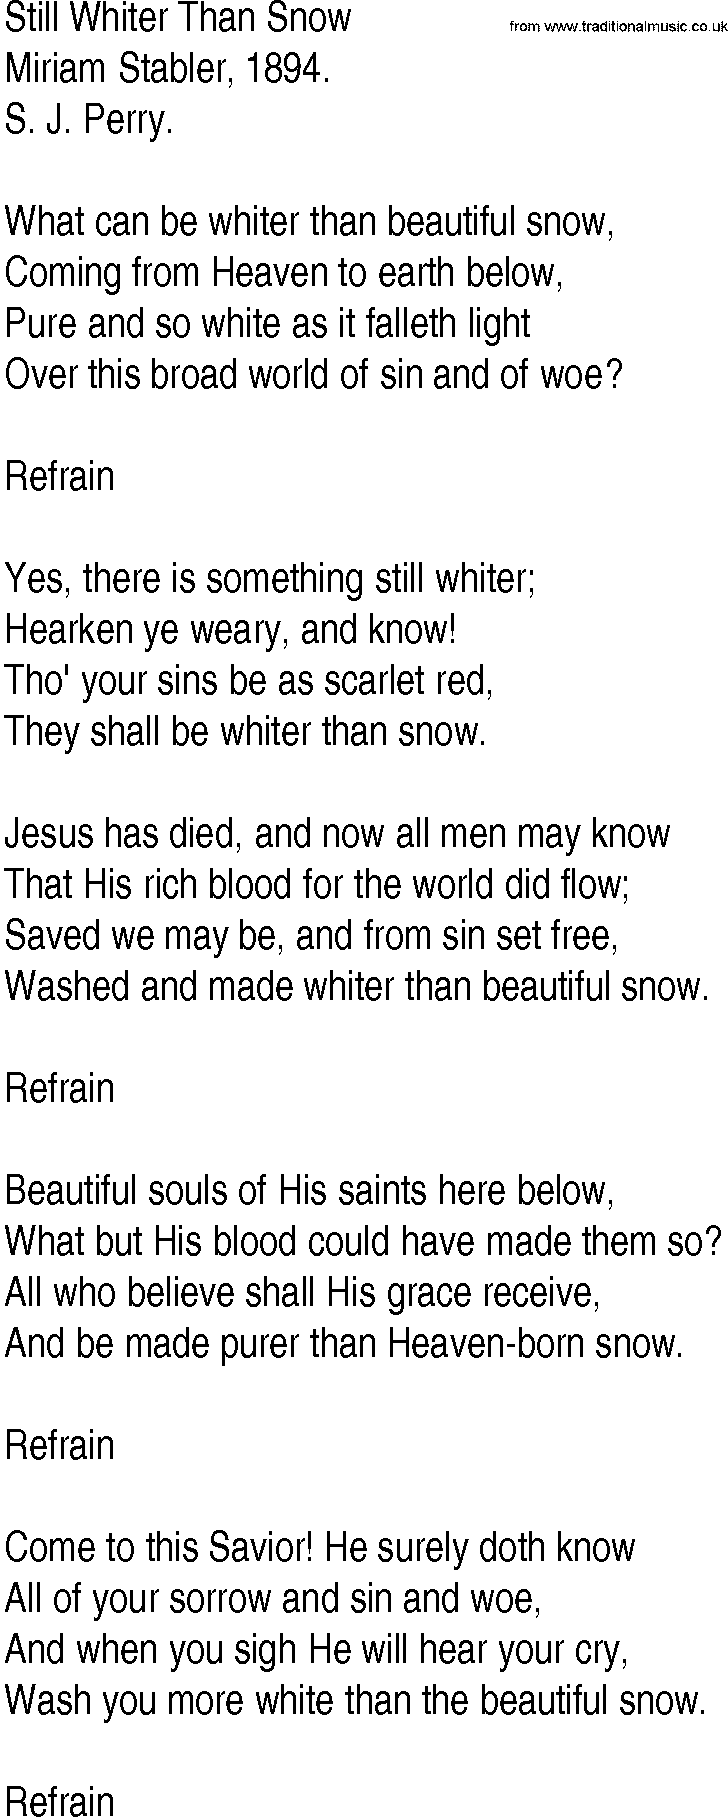 Hymn and Gospel Song: Still Whiter Than Snow by Miriam Stabler lyrics